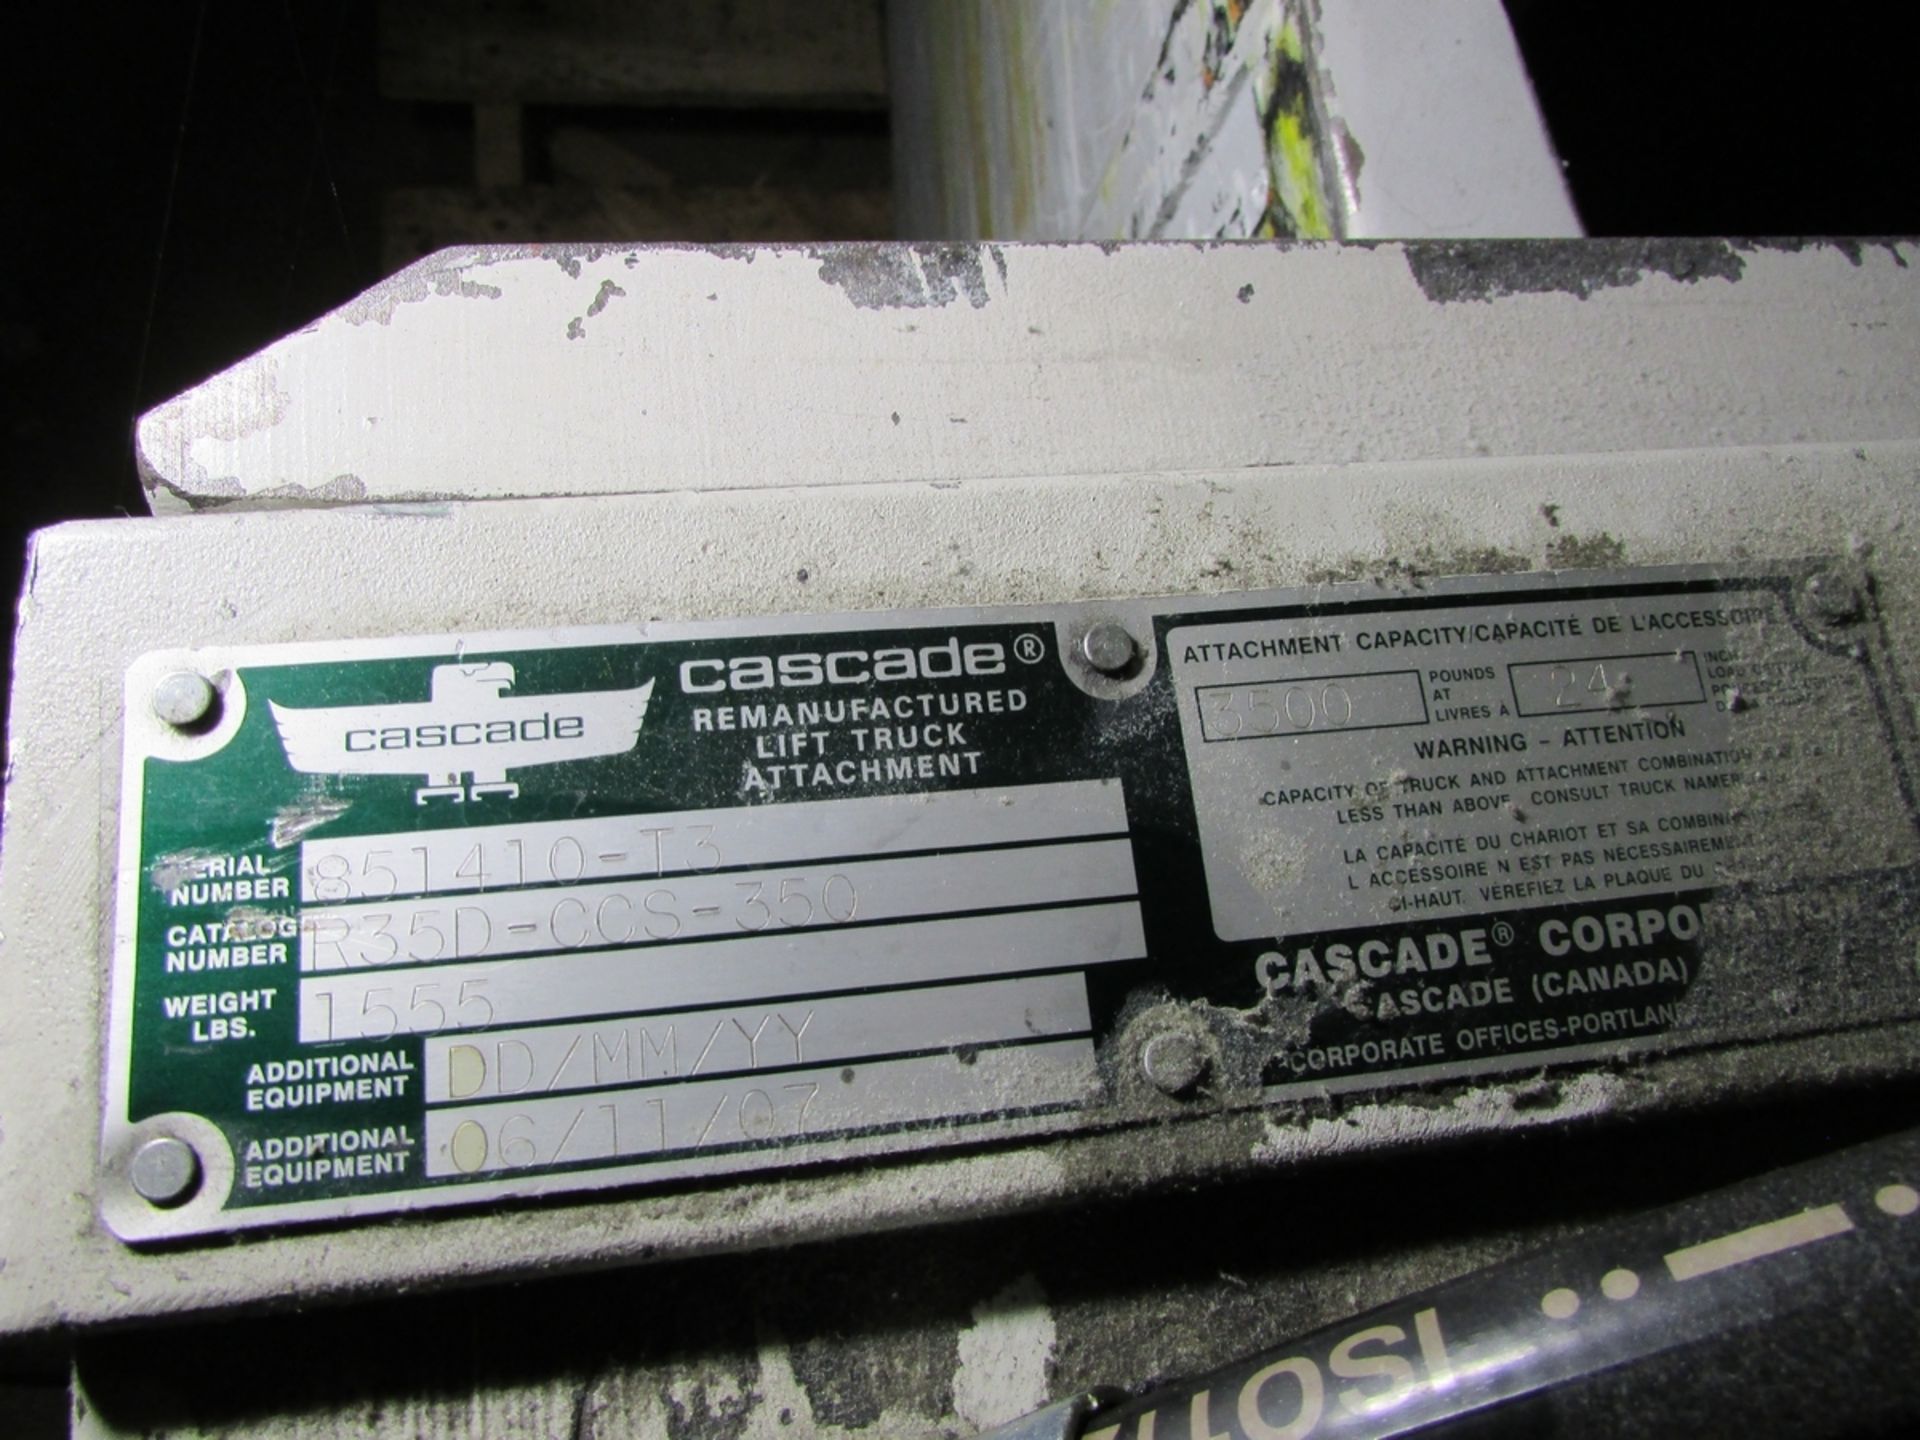 Cascade R35D-CCS-350 Carton Clamp Forklift Attachment - Image 3 of 3